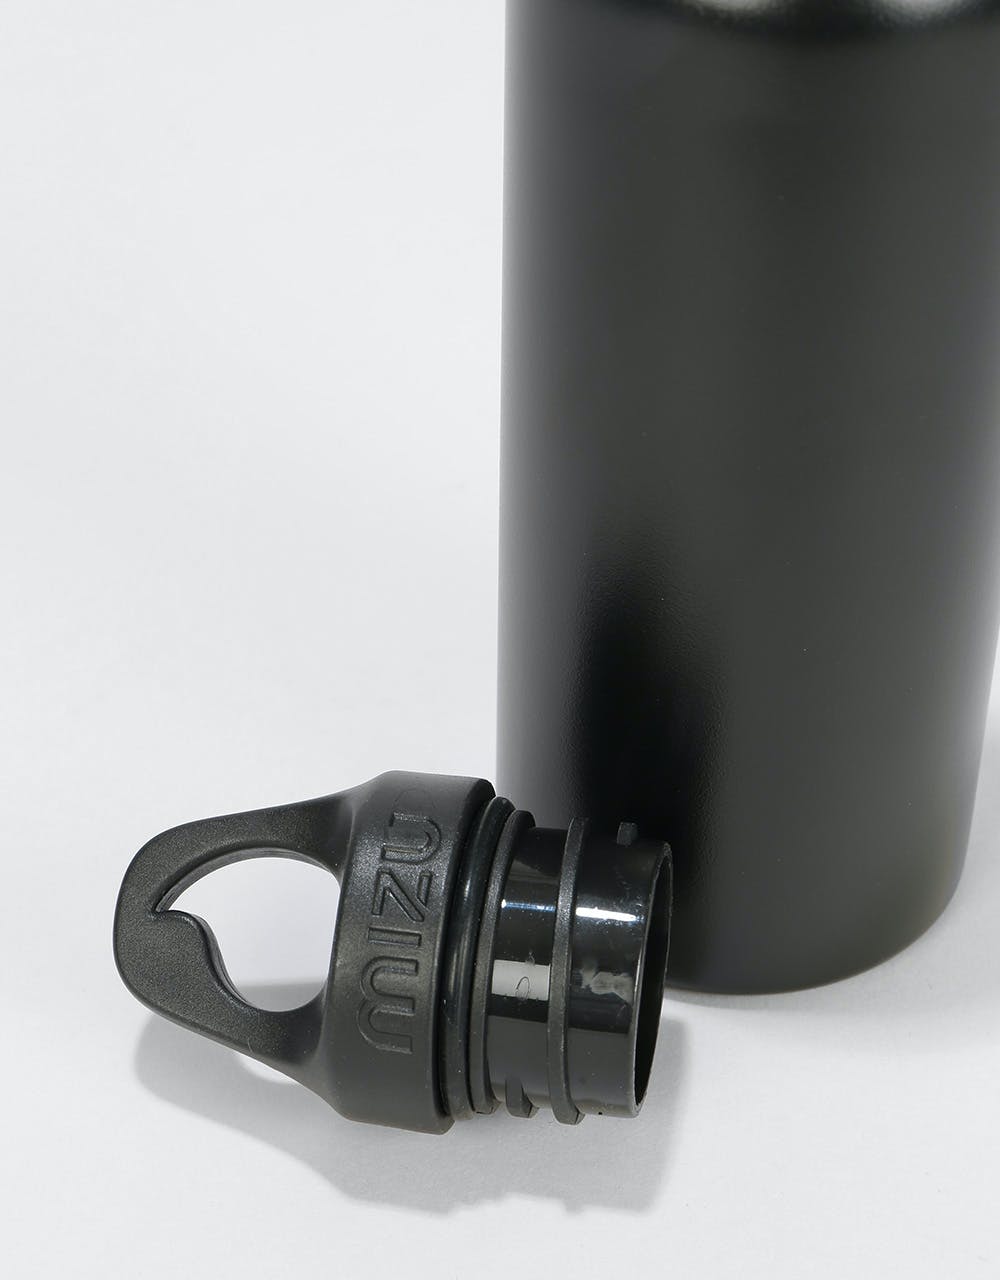 Mizu M5 Single Wall 530ml/18oz Water Bottle - Black